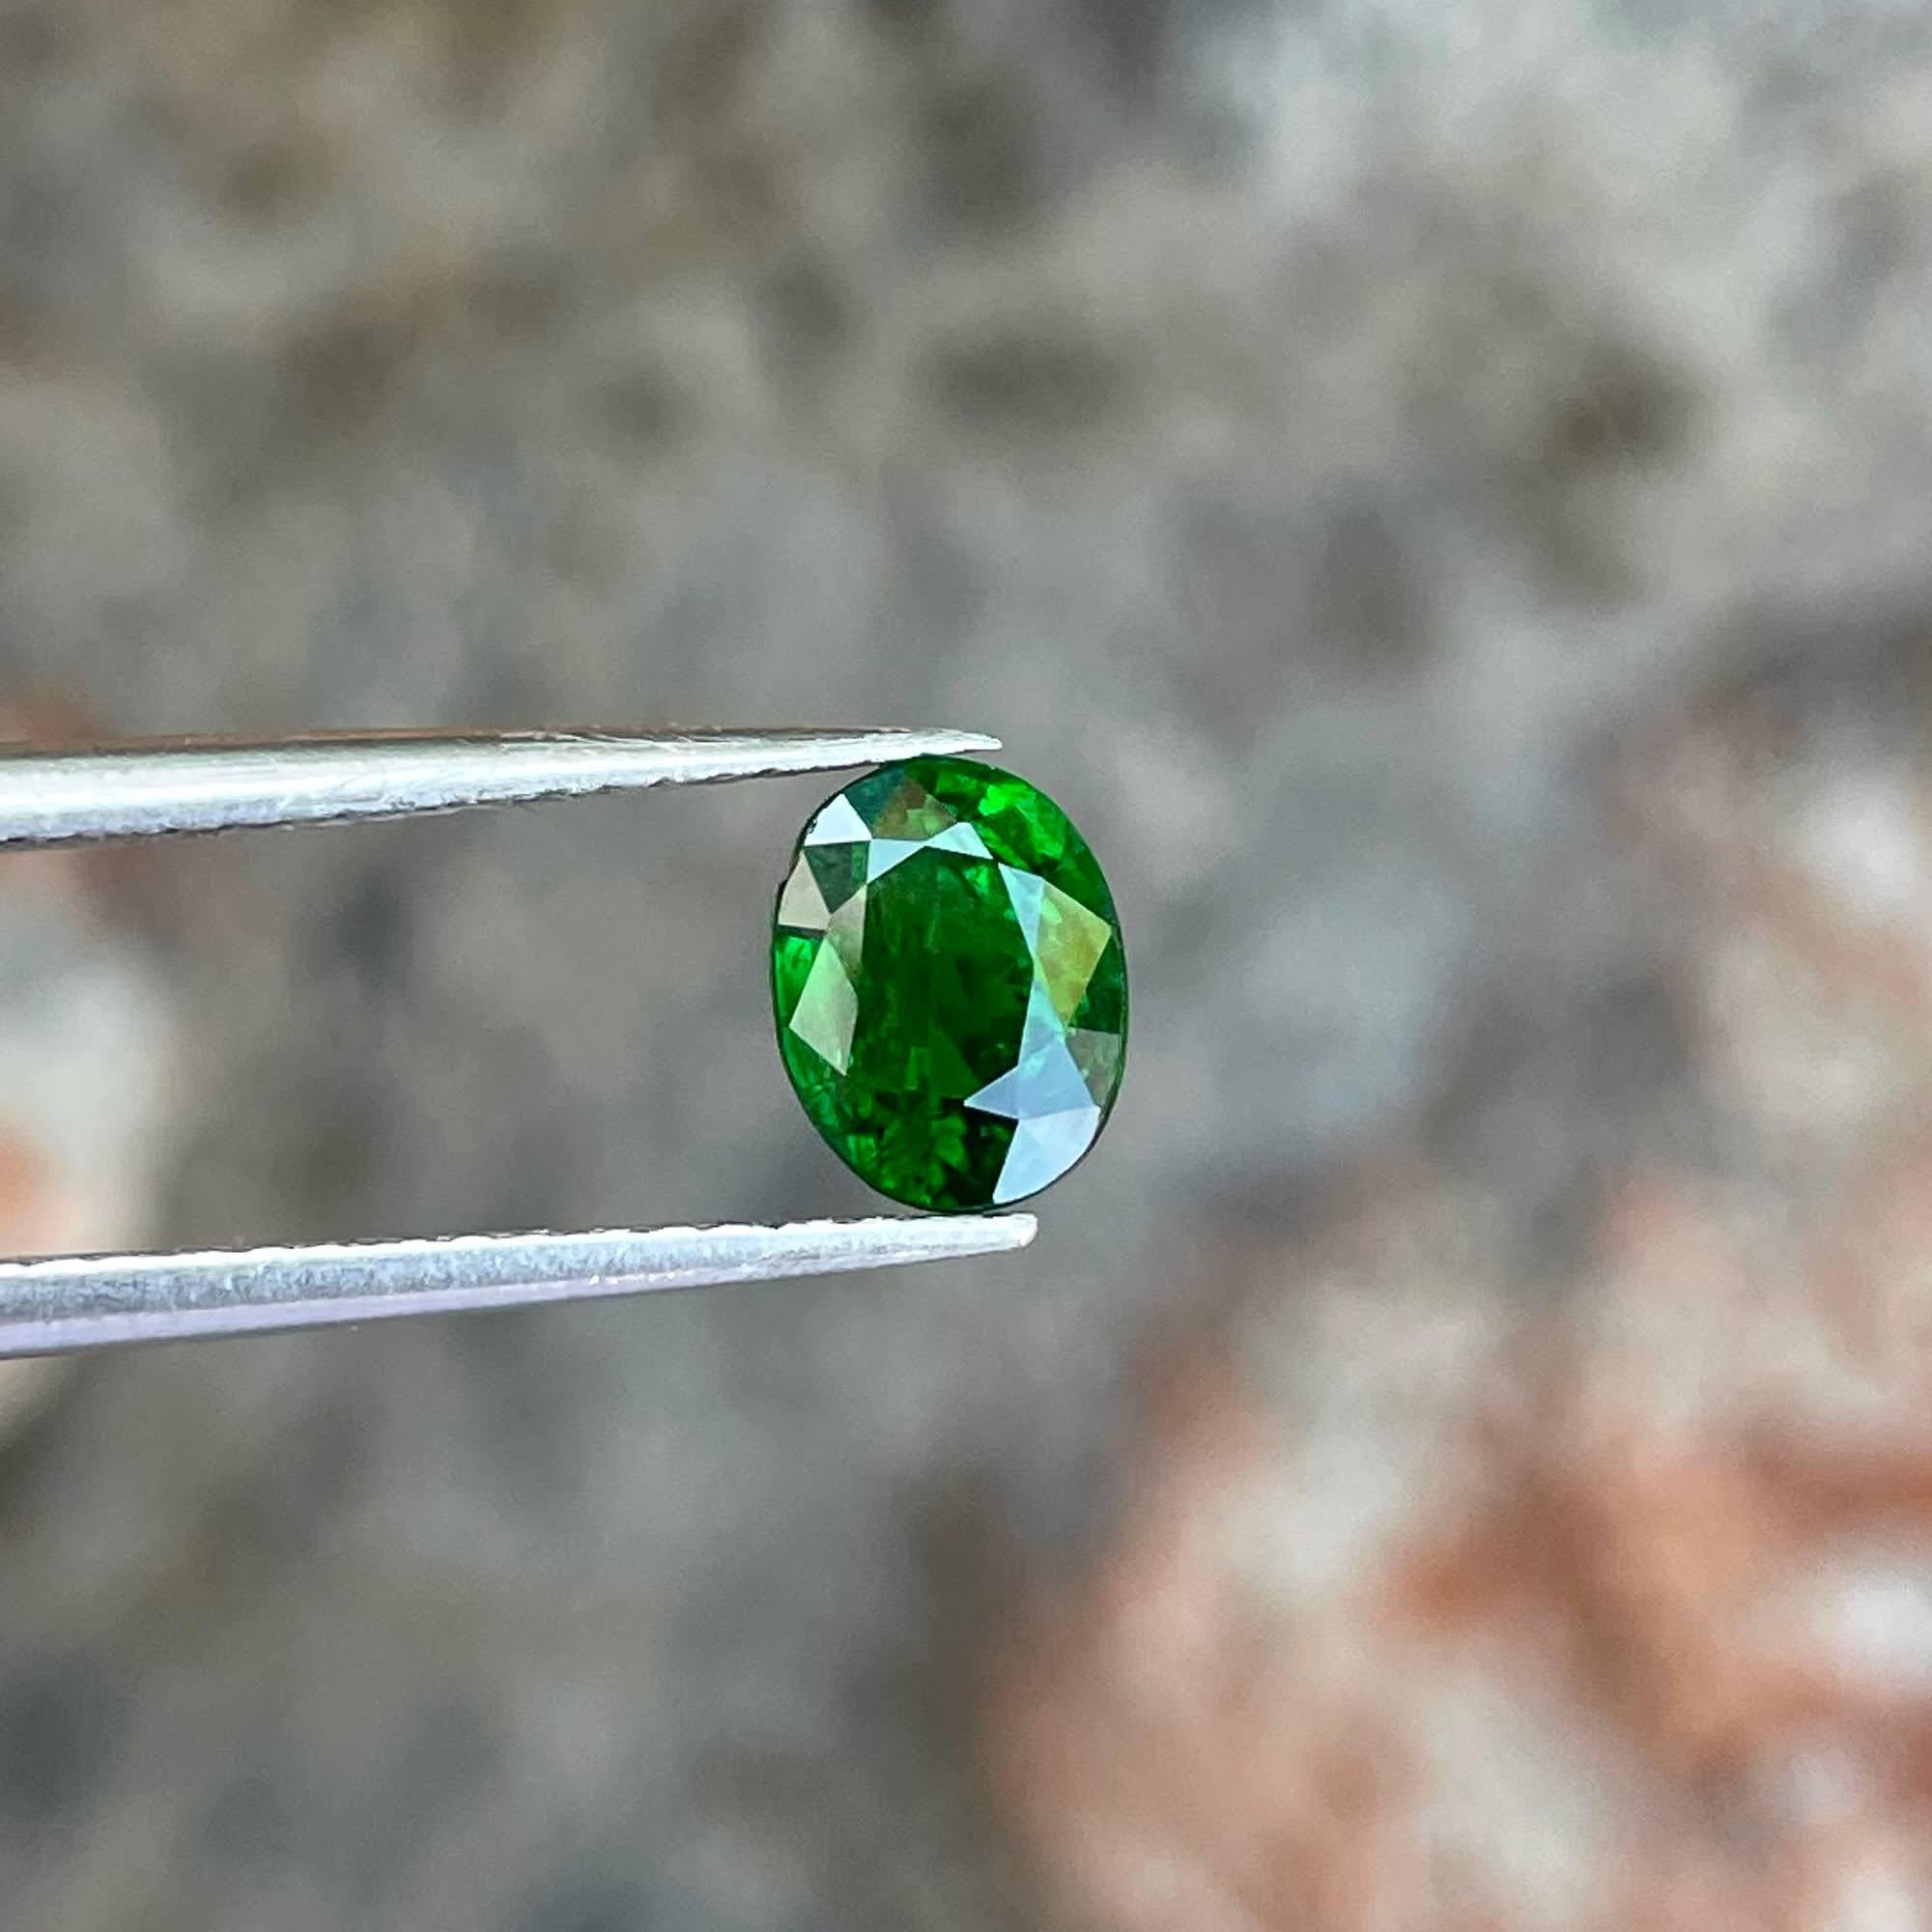 Modern 1.30 carats Green Tsavorite Garnet Stone Oval Cut Natural Gemstone from Kenya For Sale